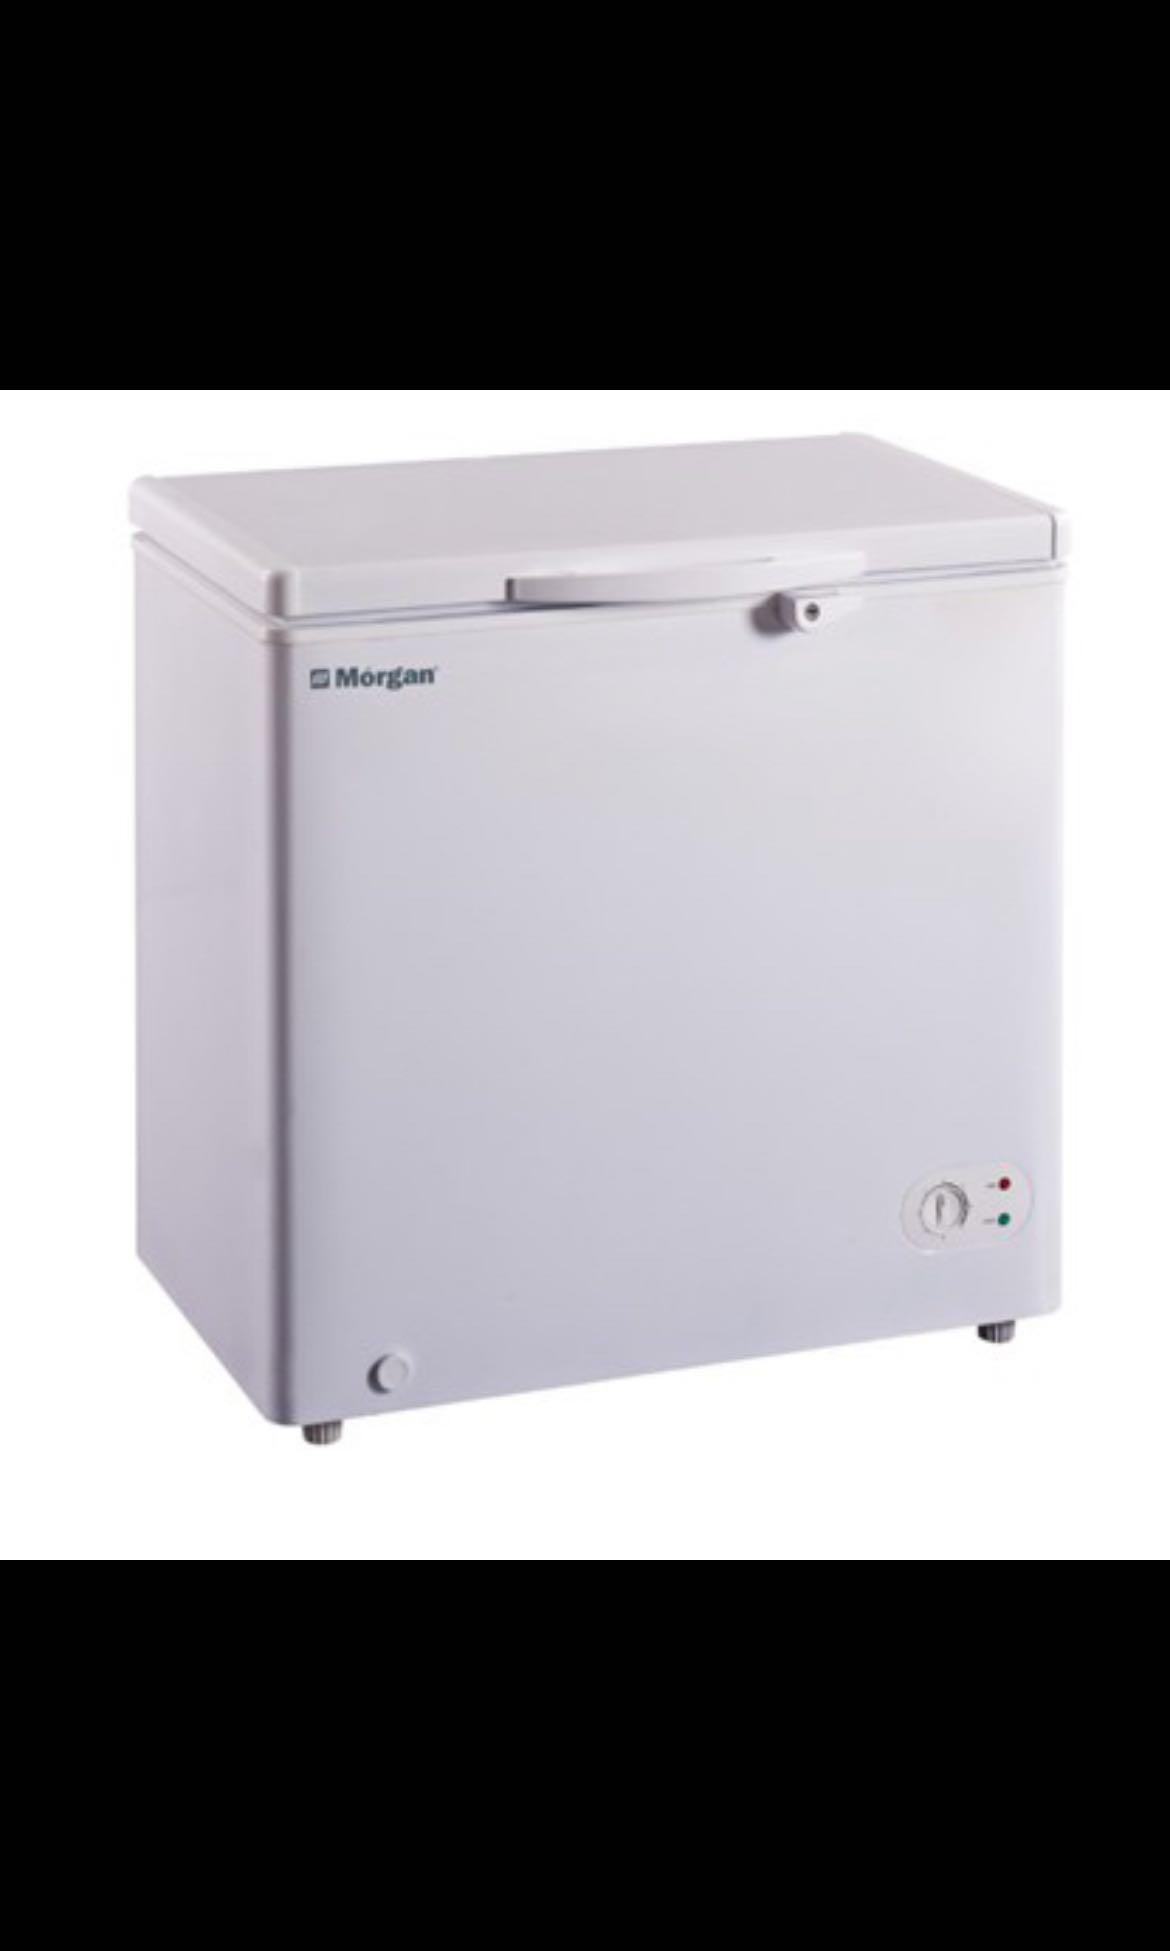 Morgan Freezer L TV Home Appliances Kitchen Appliances Refrigerators Freezers On Carousell